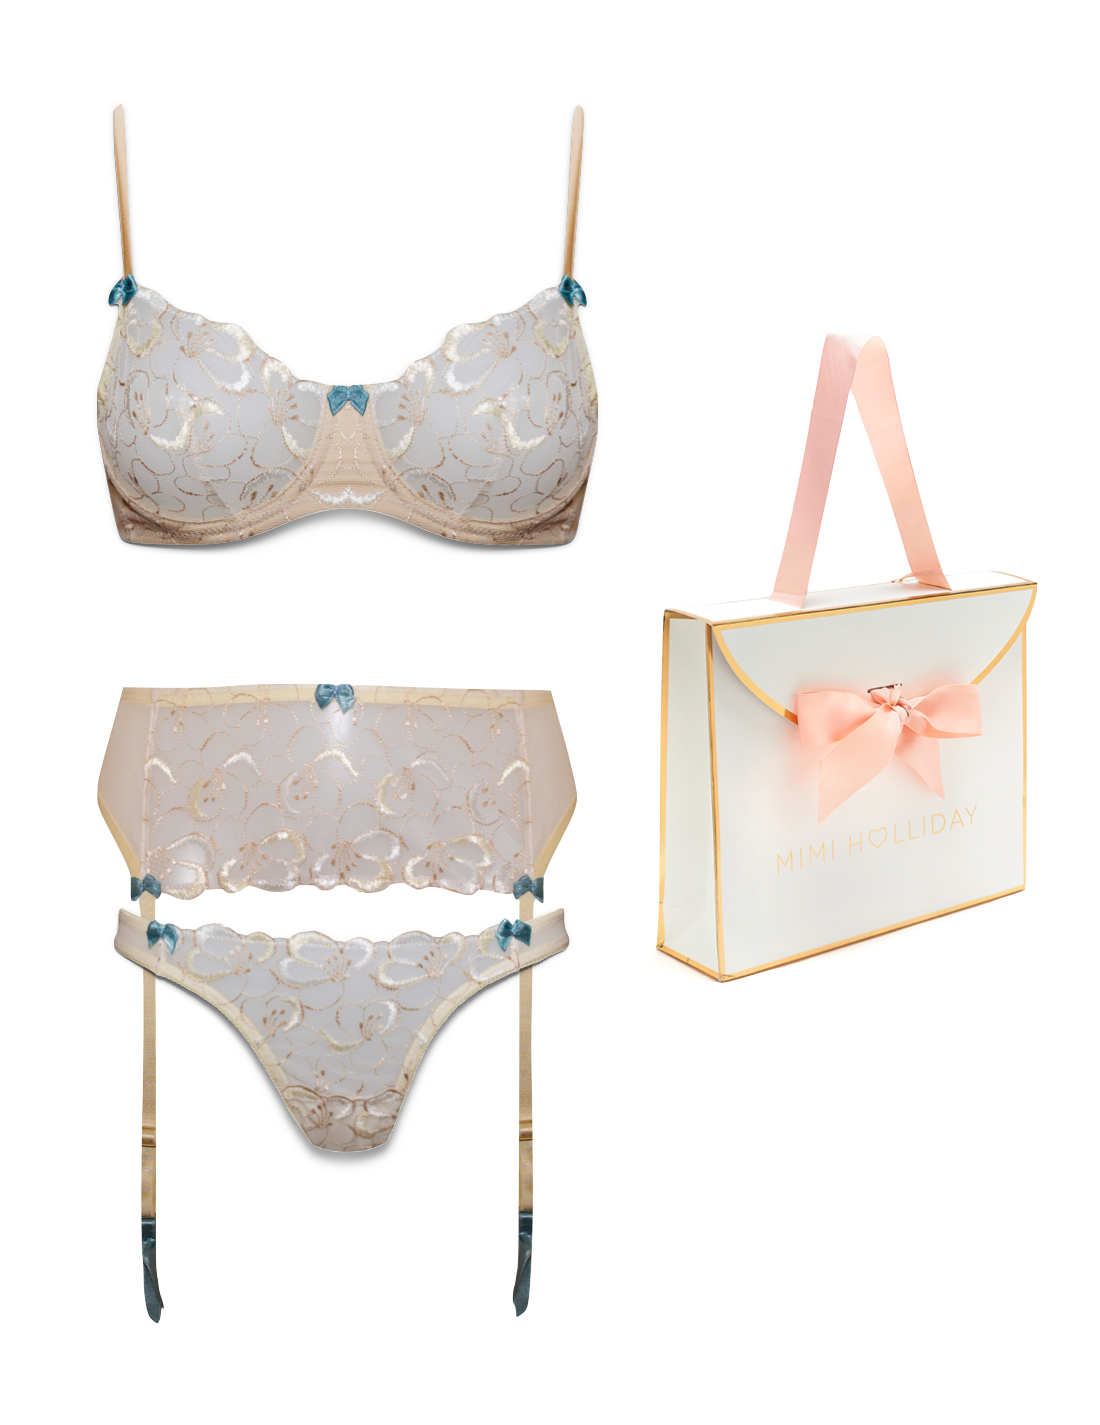 Amour d'Ivoire Comfort Bra, Brief, Suspender & Bag Gift Set